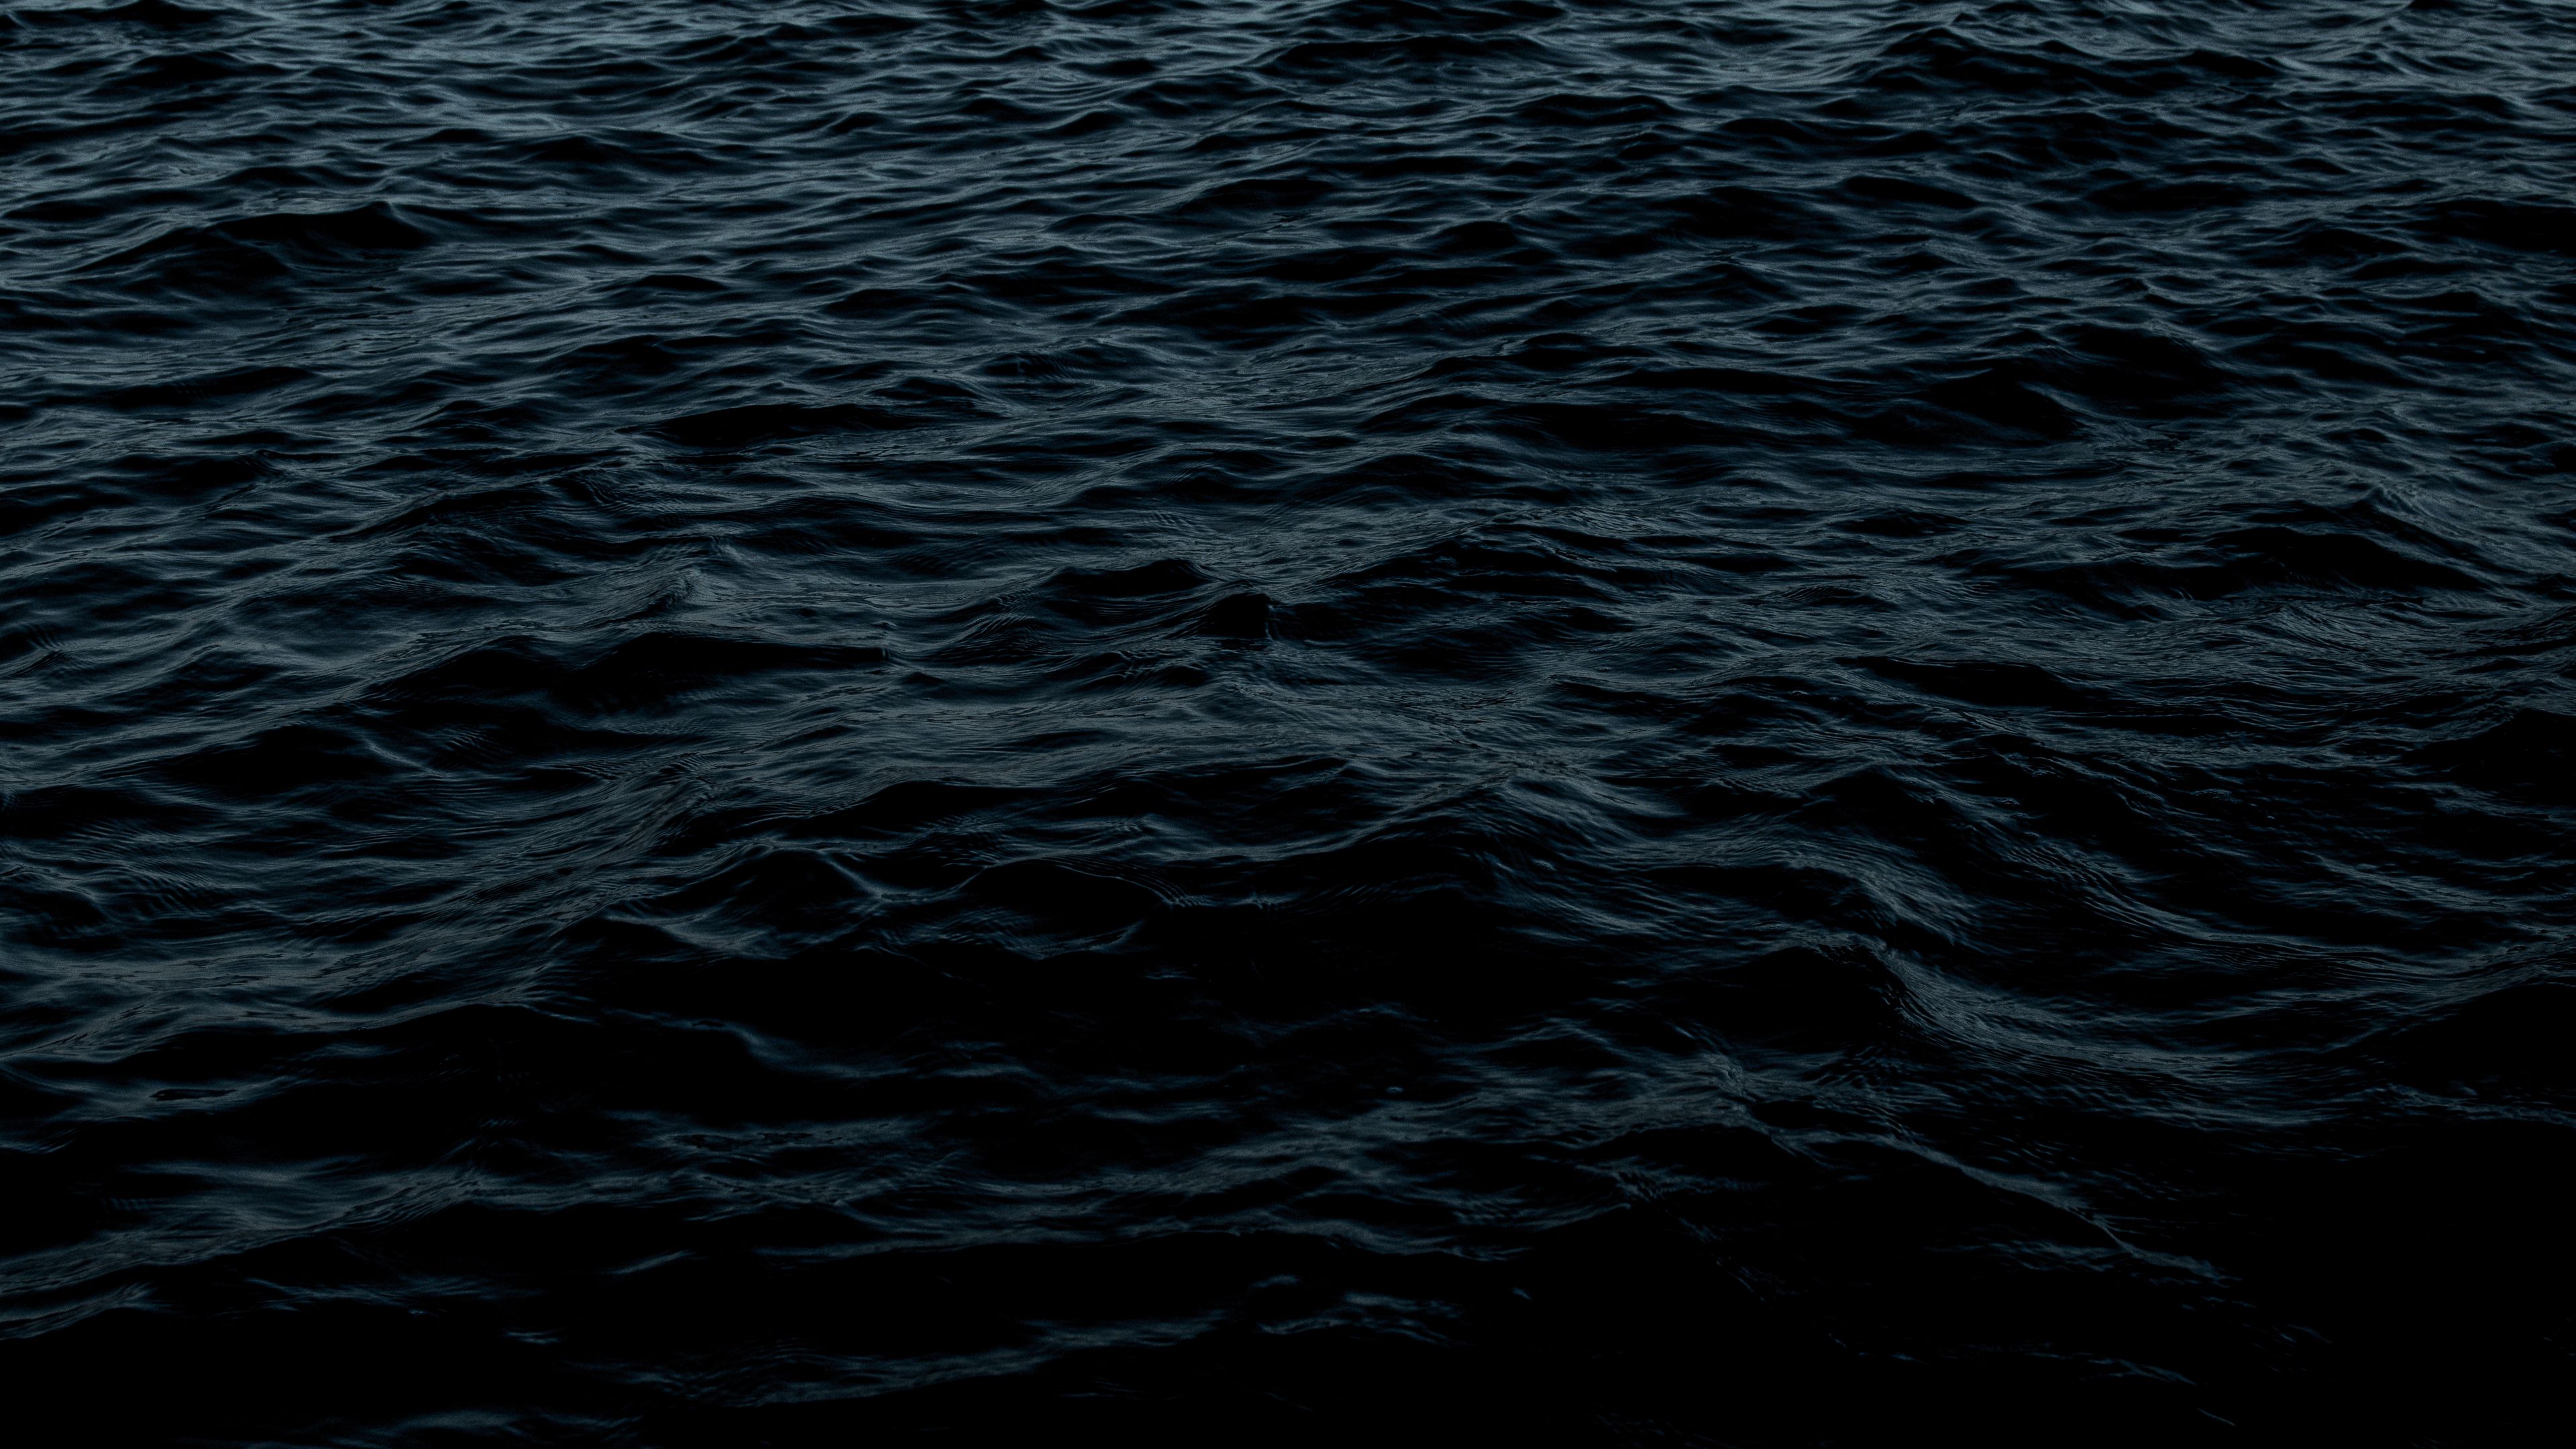 Abstract Dark Waves Wallpaper Background Stock Illustration 535445287   Shutterstock